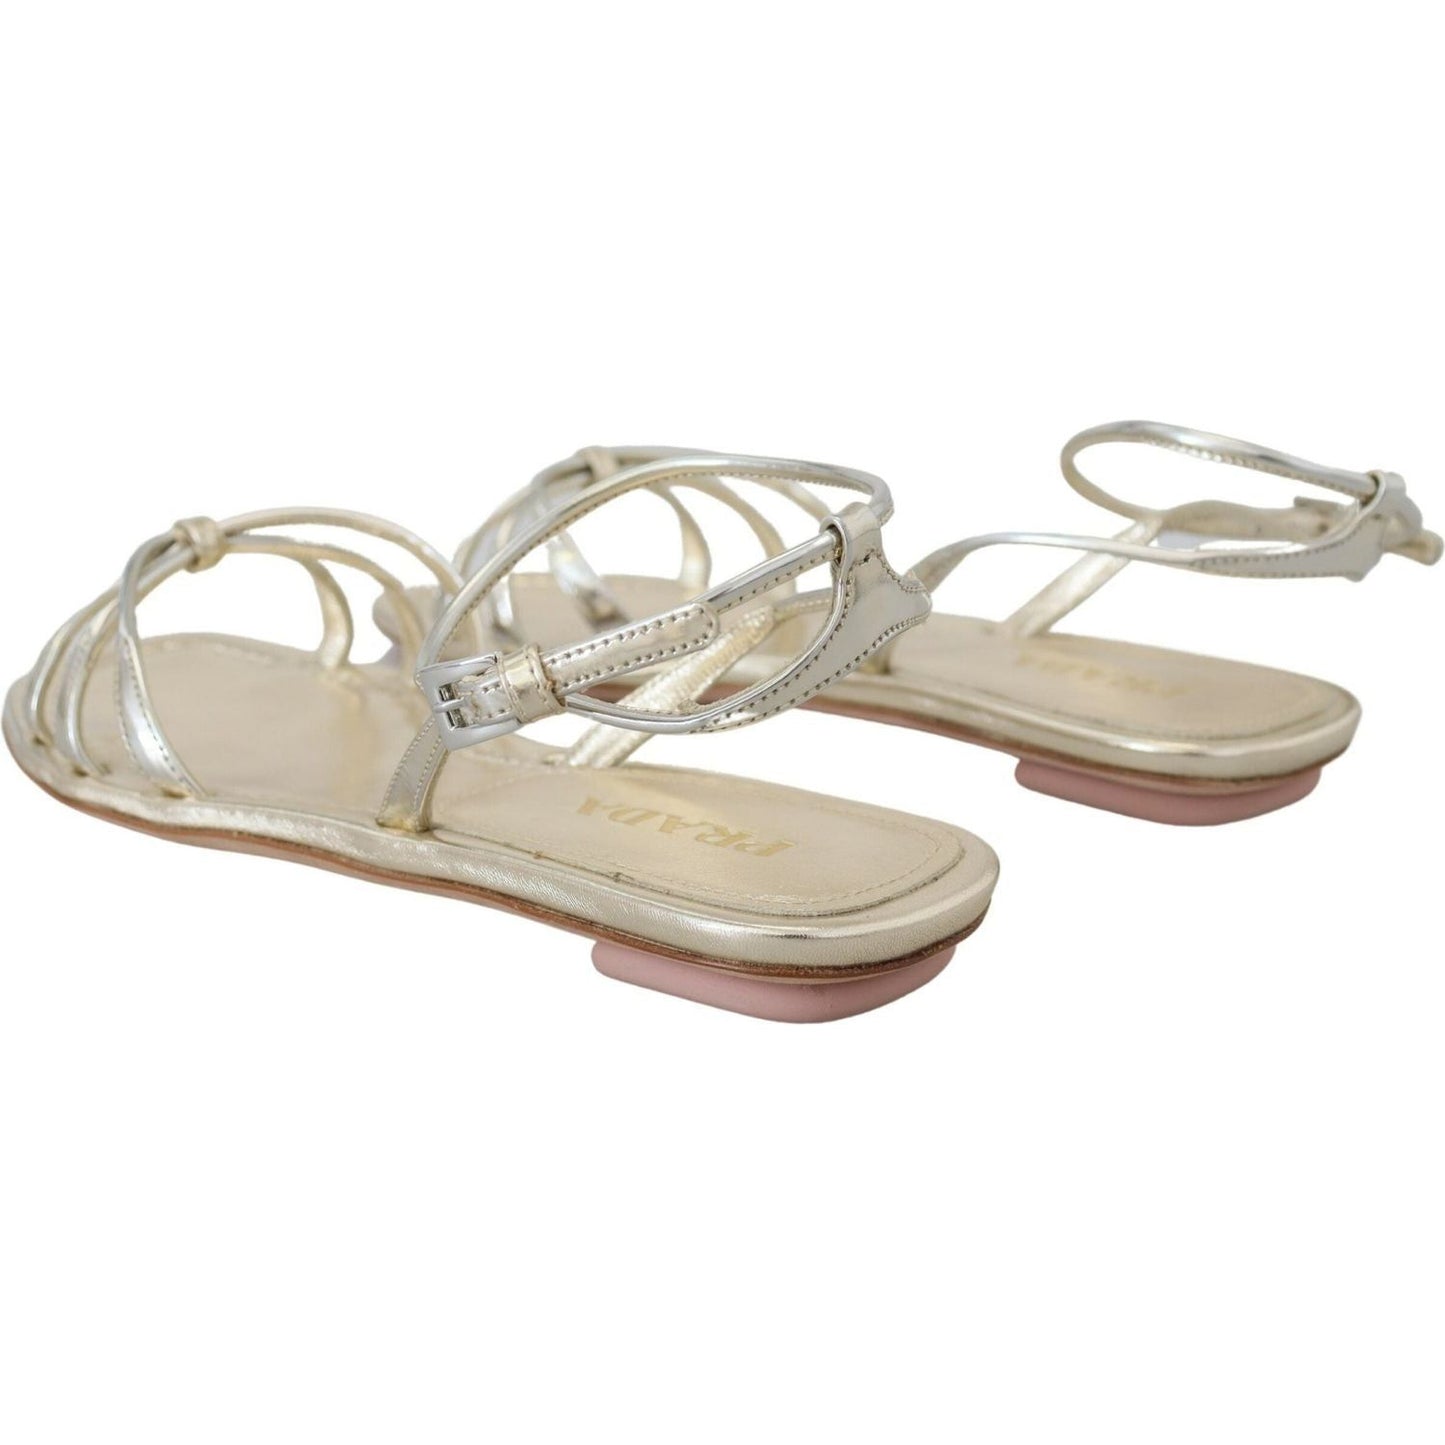 Prada Elegant Silver Ankle Strap Flats metallic-silver-leather-sandals-ankle-strap-flats-shoes IMG_8004-scaled-99ce91ff-304.jpg